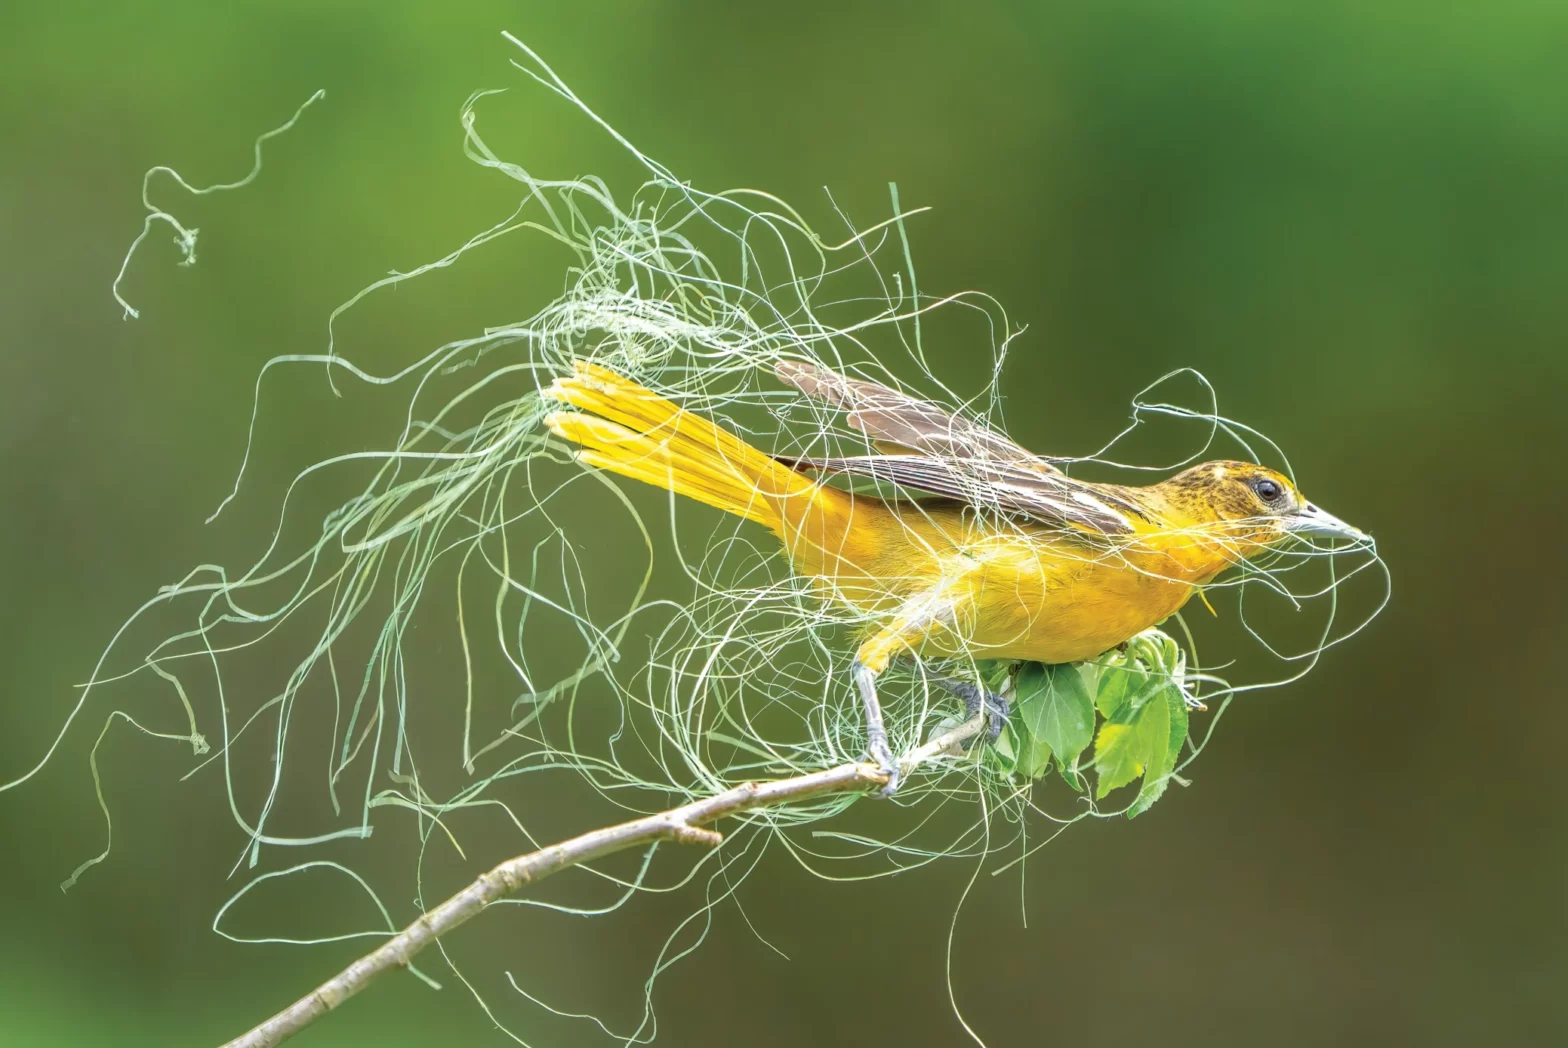 Pennsylvania photographer wins National Audubon award for bird photo